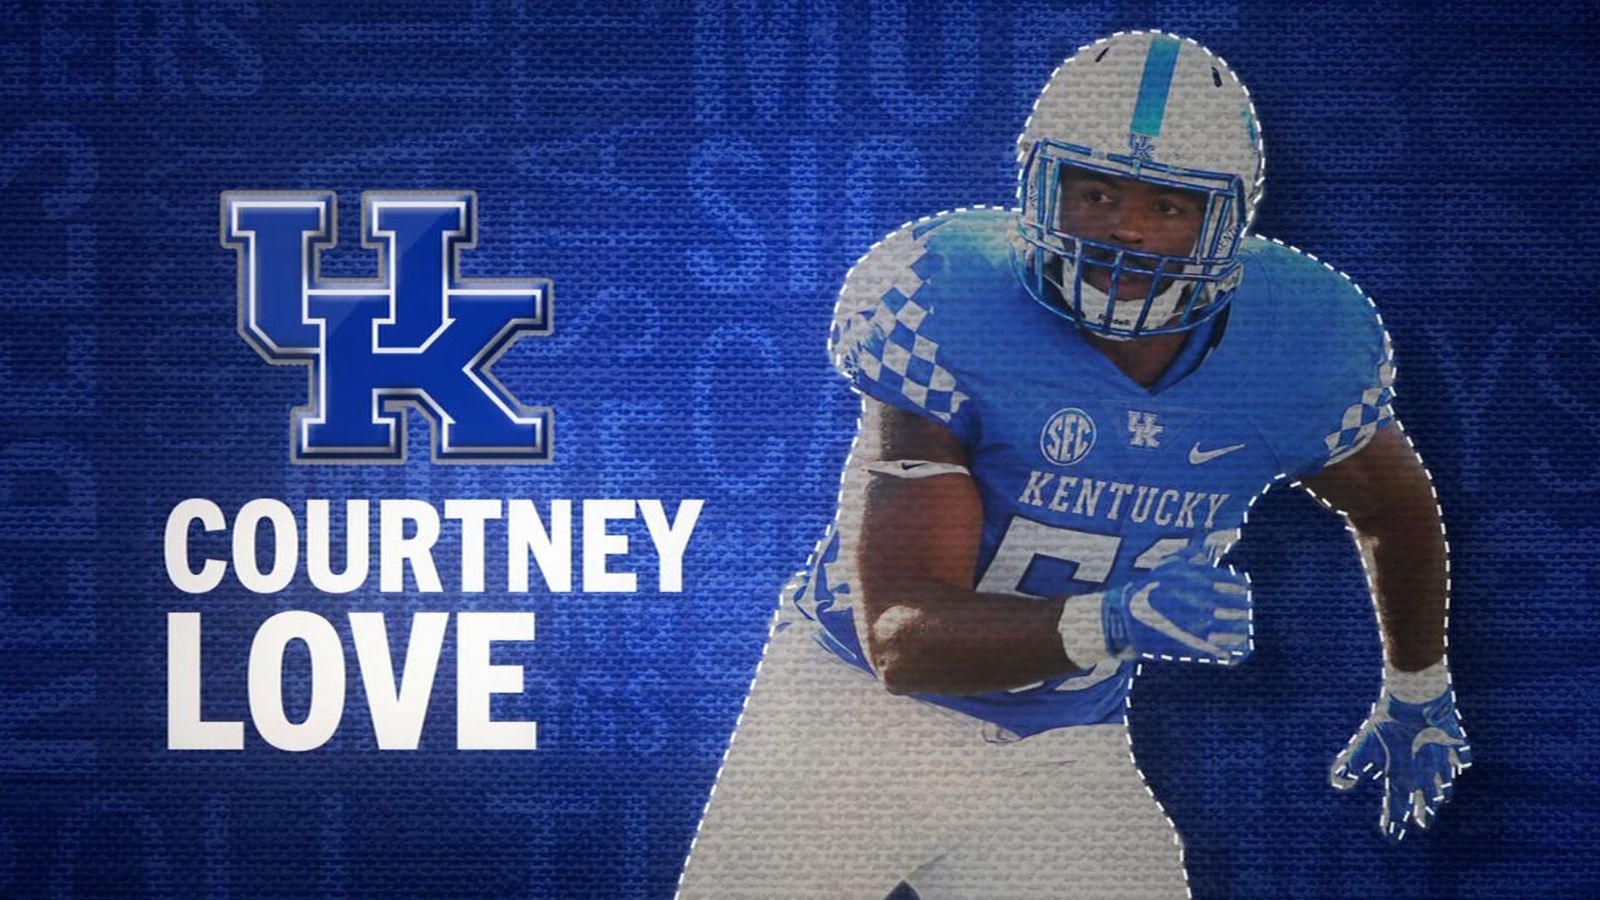 I am the SEC: Kentucky's Courtney Love